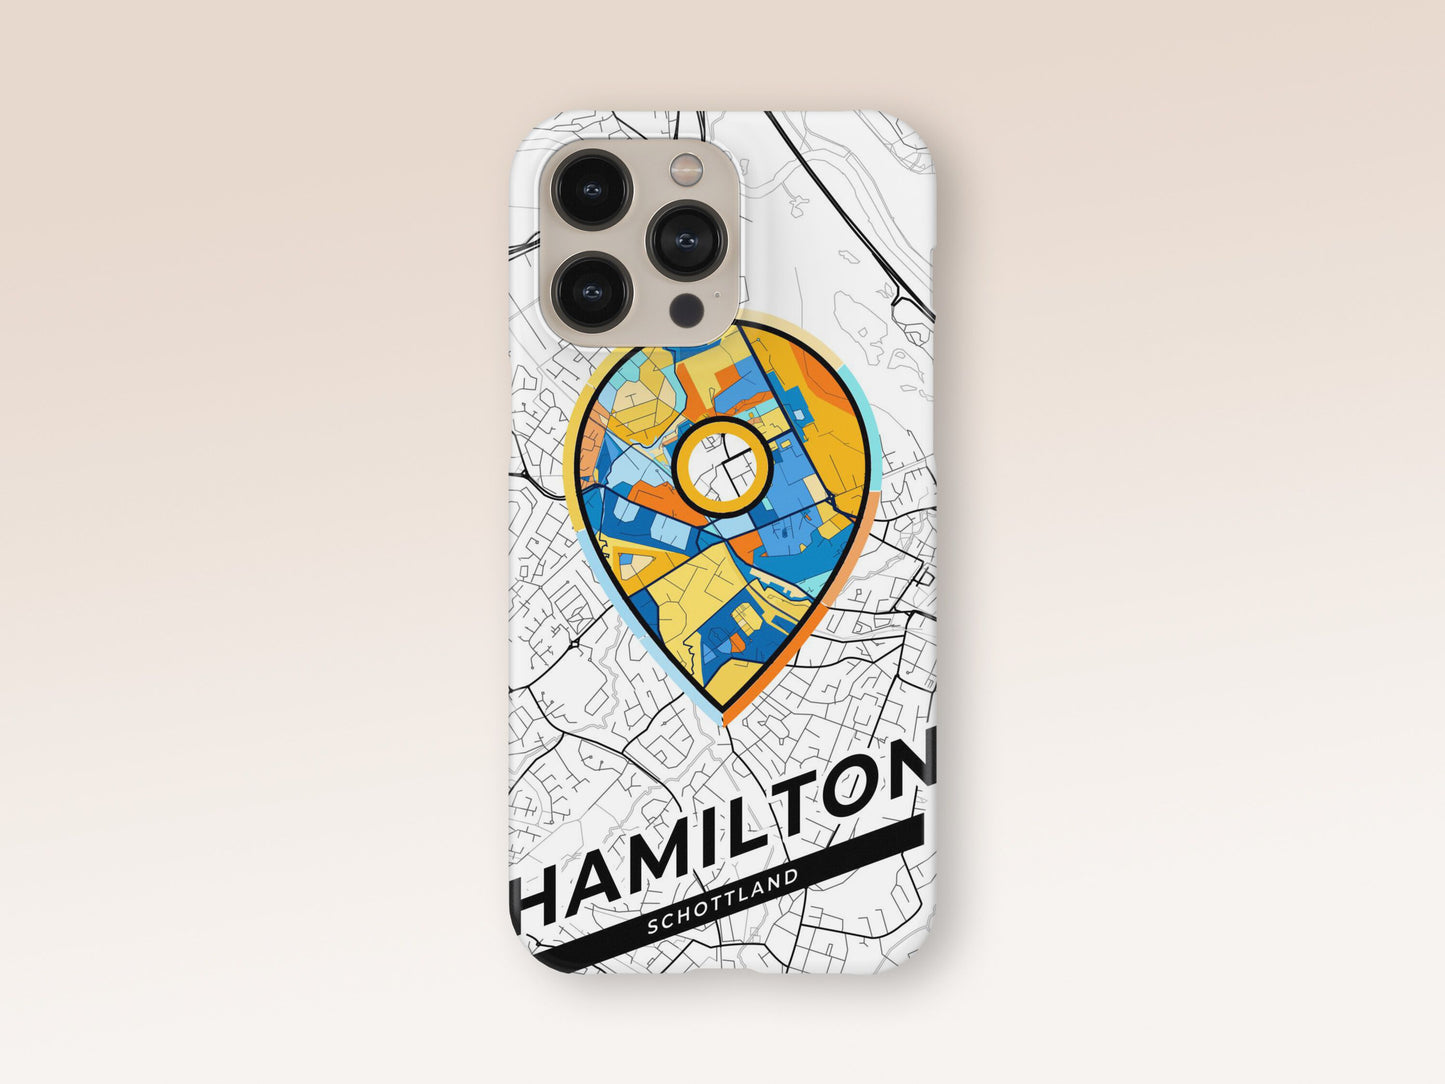 Hamilton Scotland slim phone case with colorful icon. Birthday, wedding or housewarming gift. Couple match cases. 1